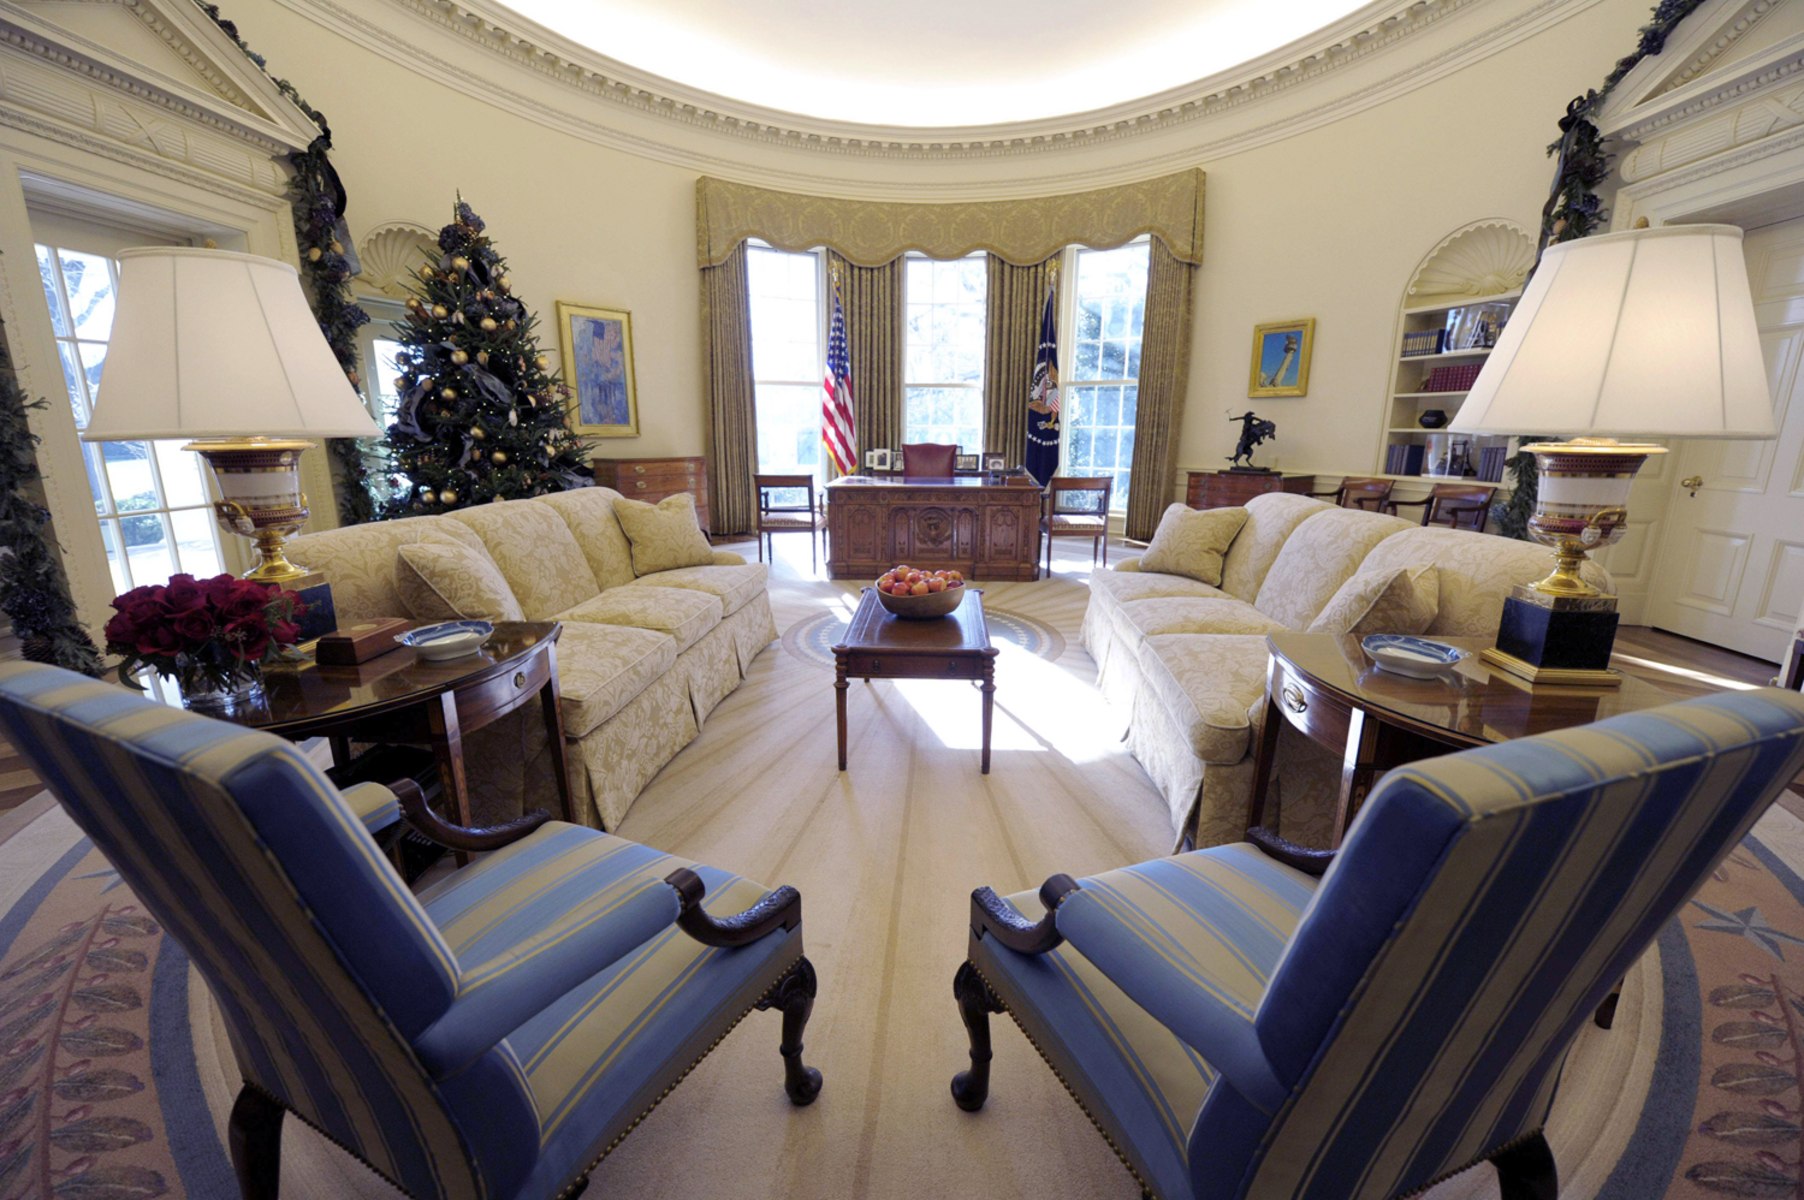 President Obama's Oval Office Remodel